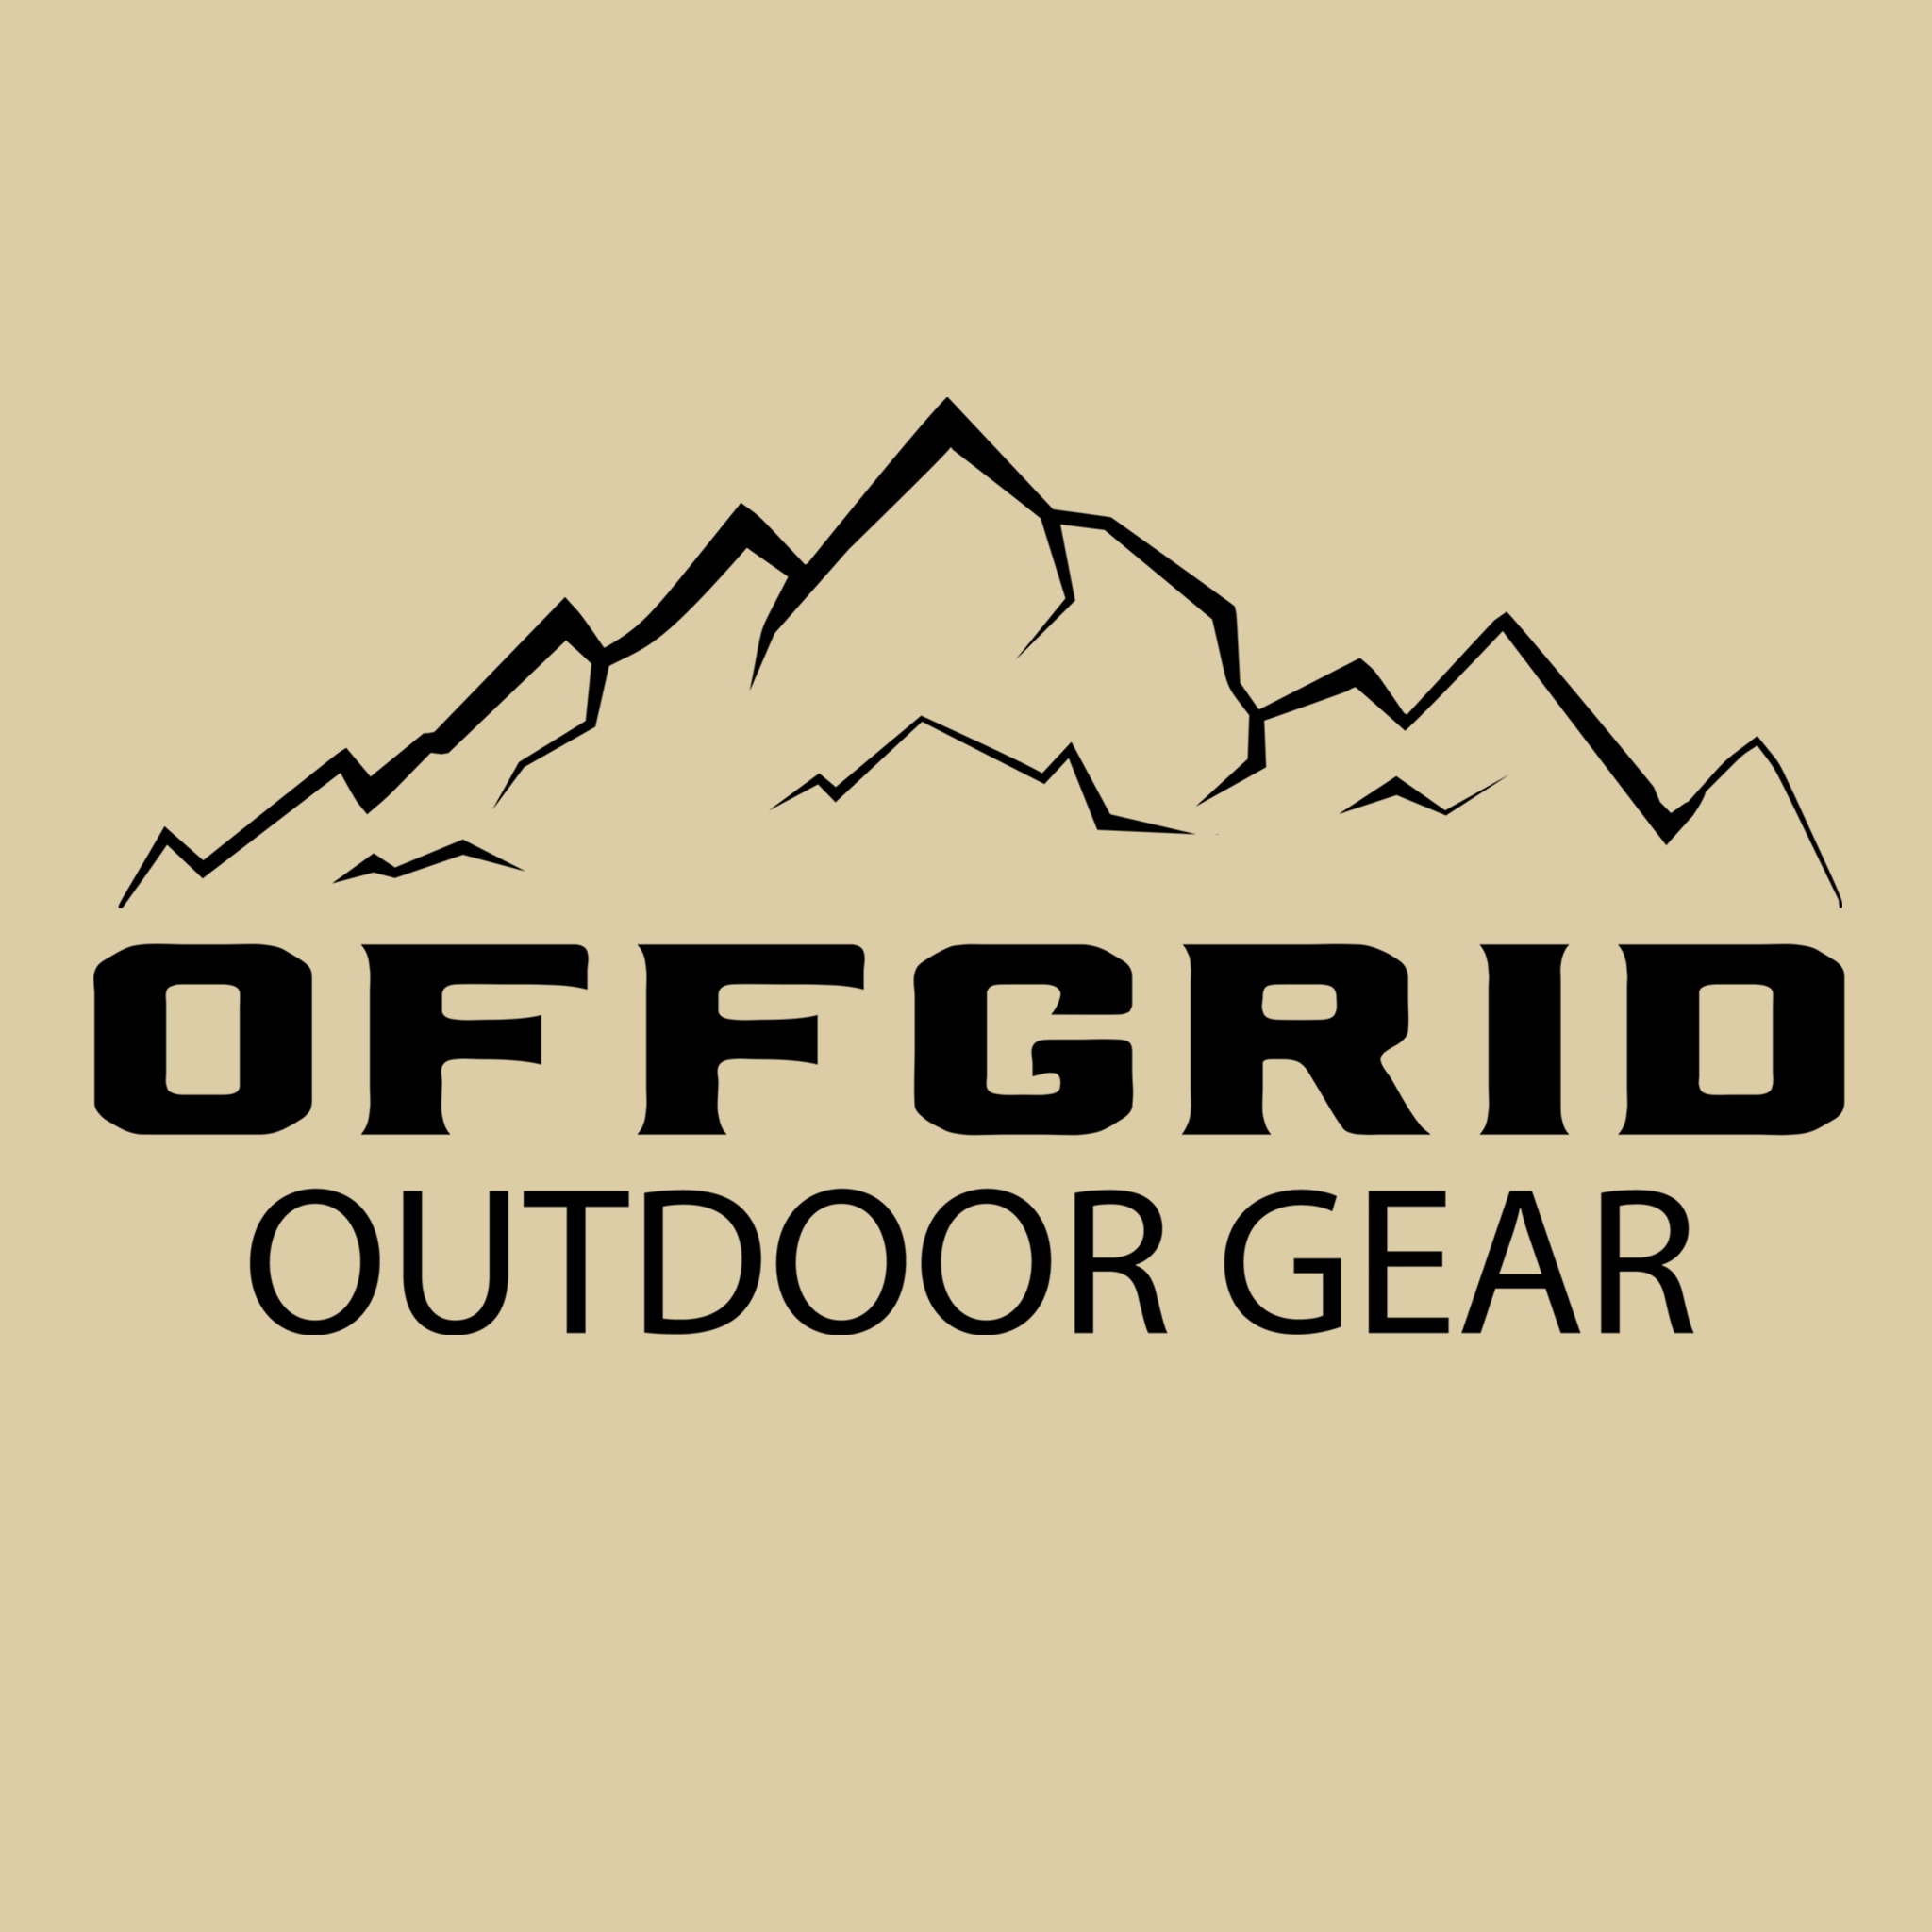 OFFGRID Outdoor Gear